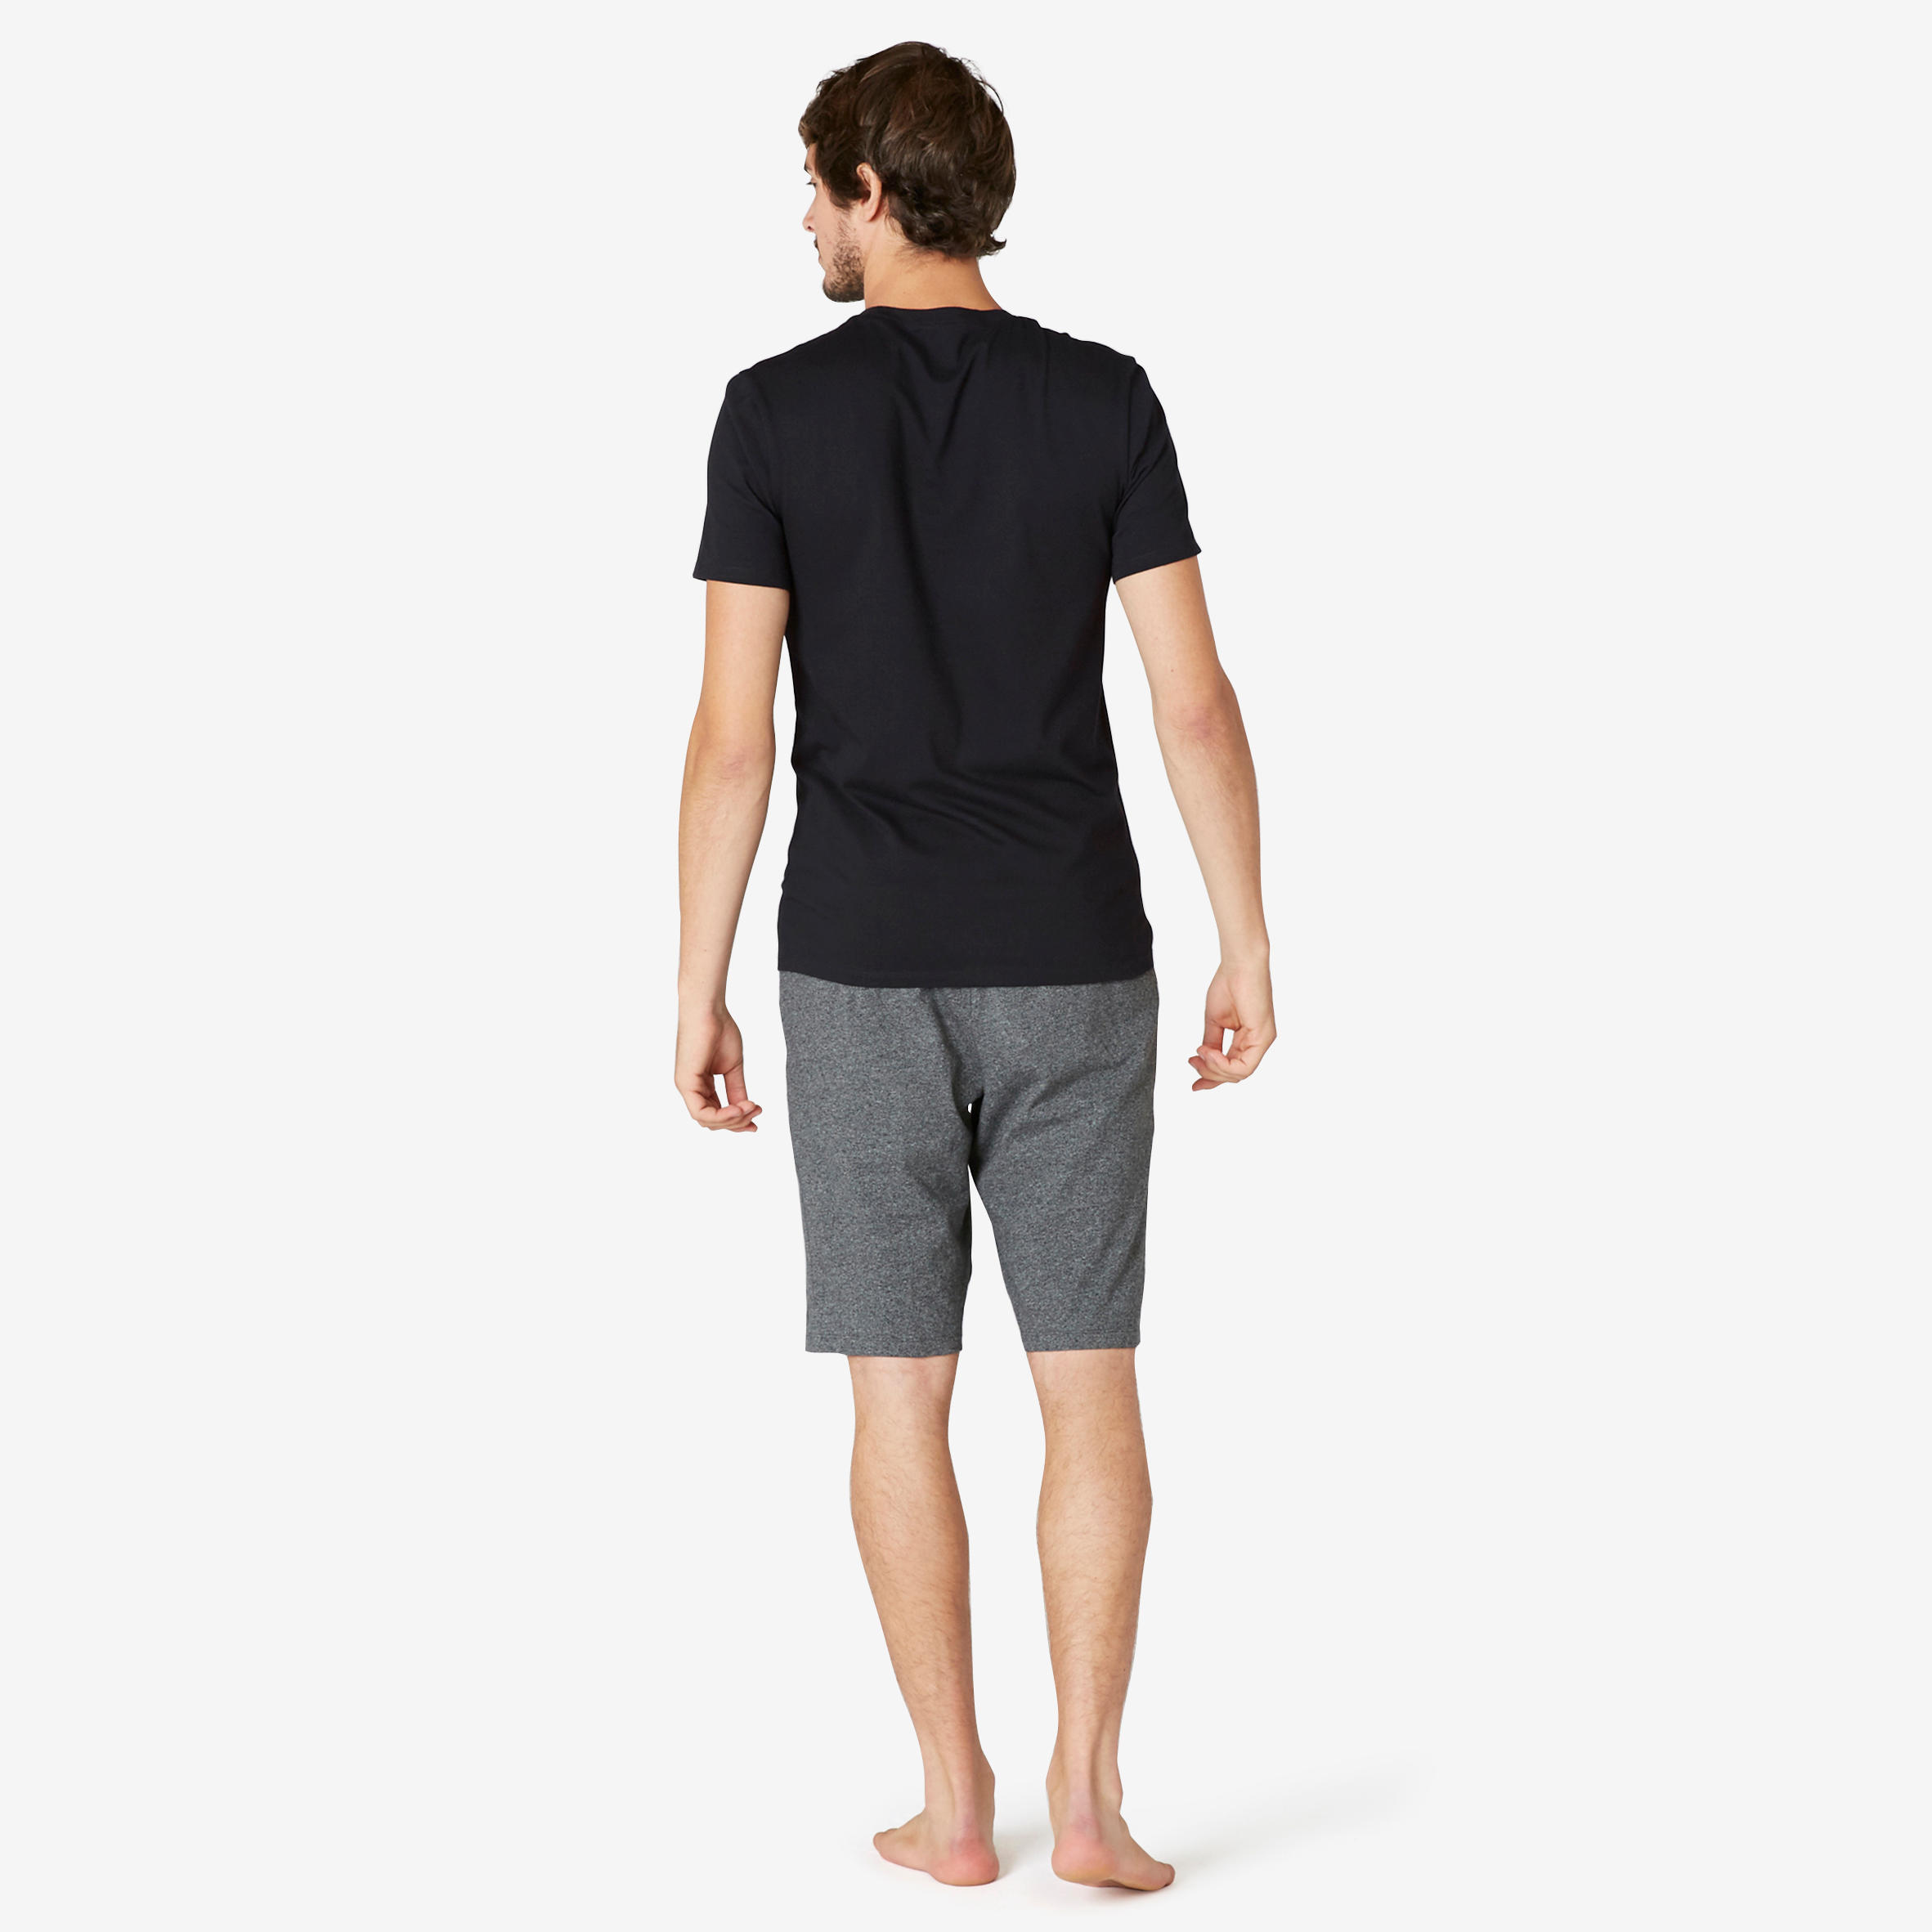 Men's Slim-Fit Fitness T-Shirt 500 - Black 16/19